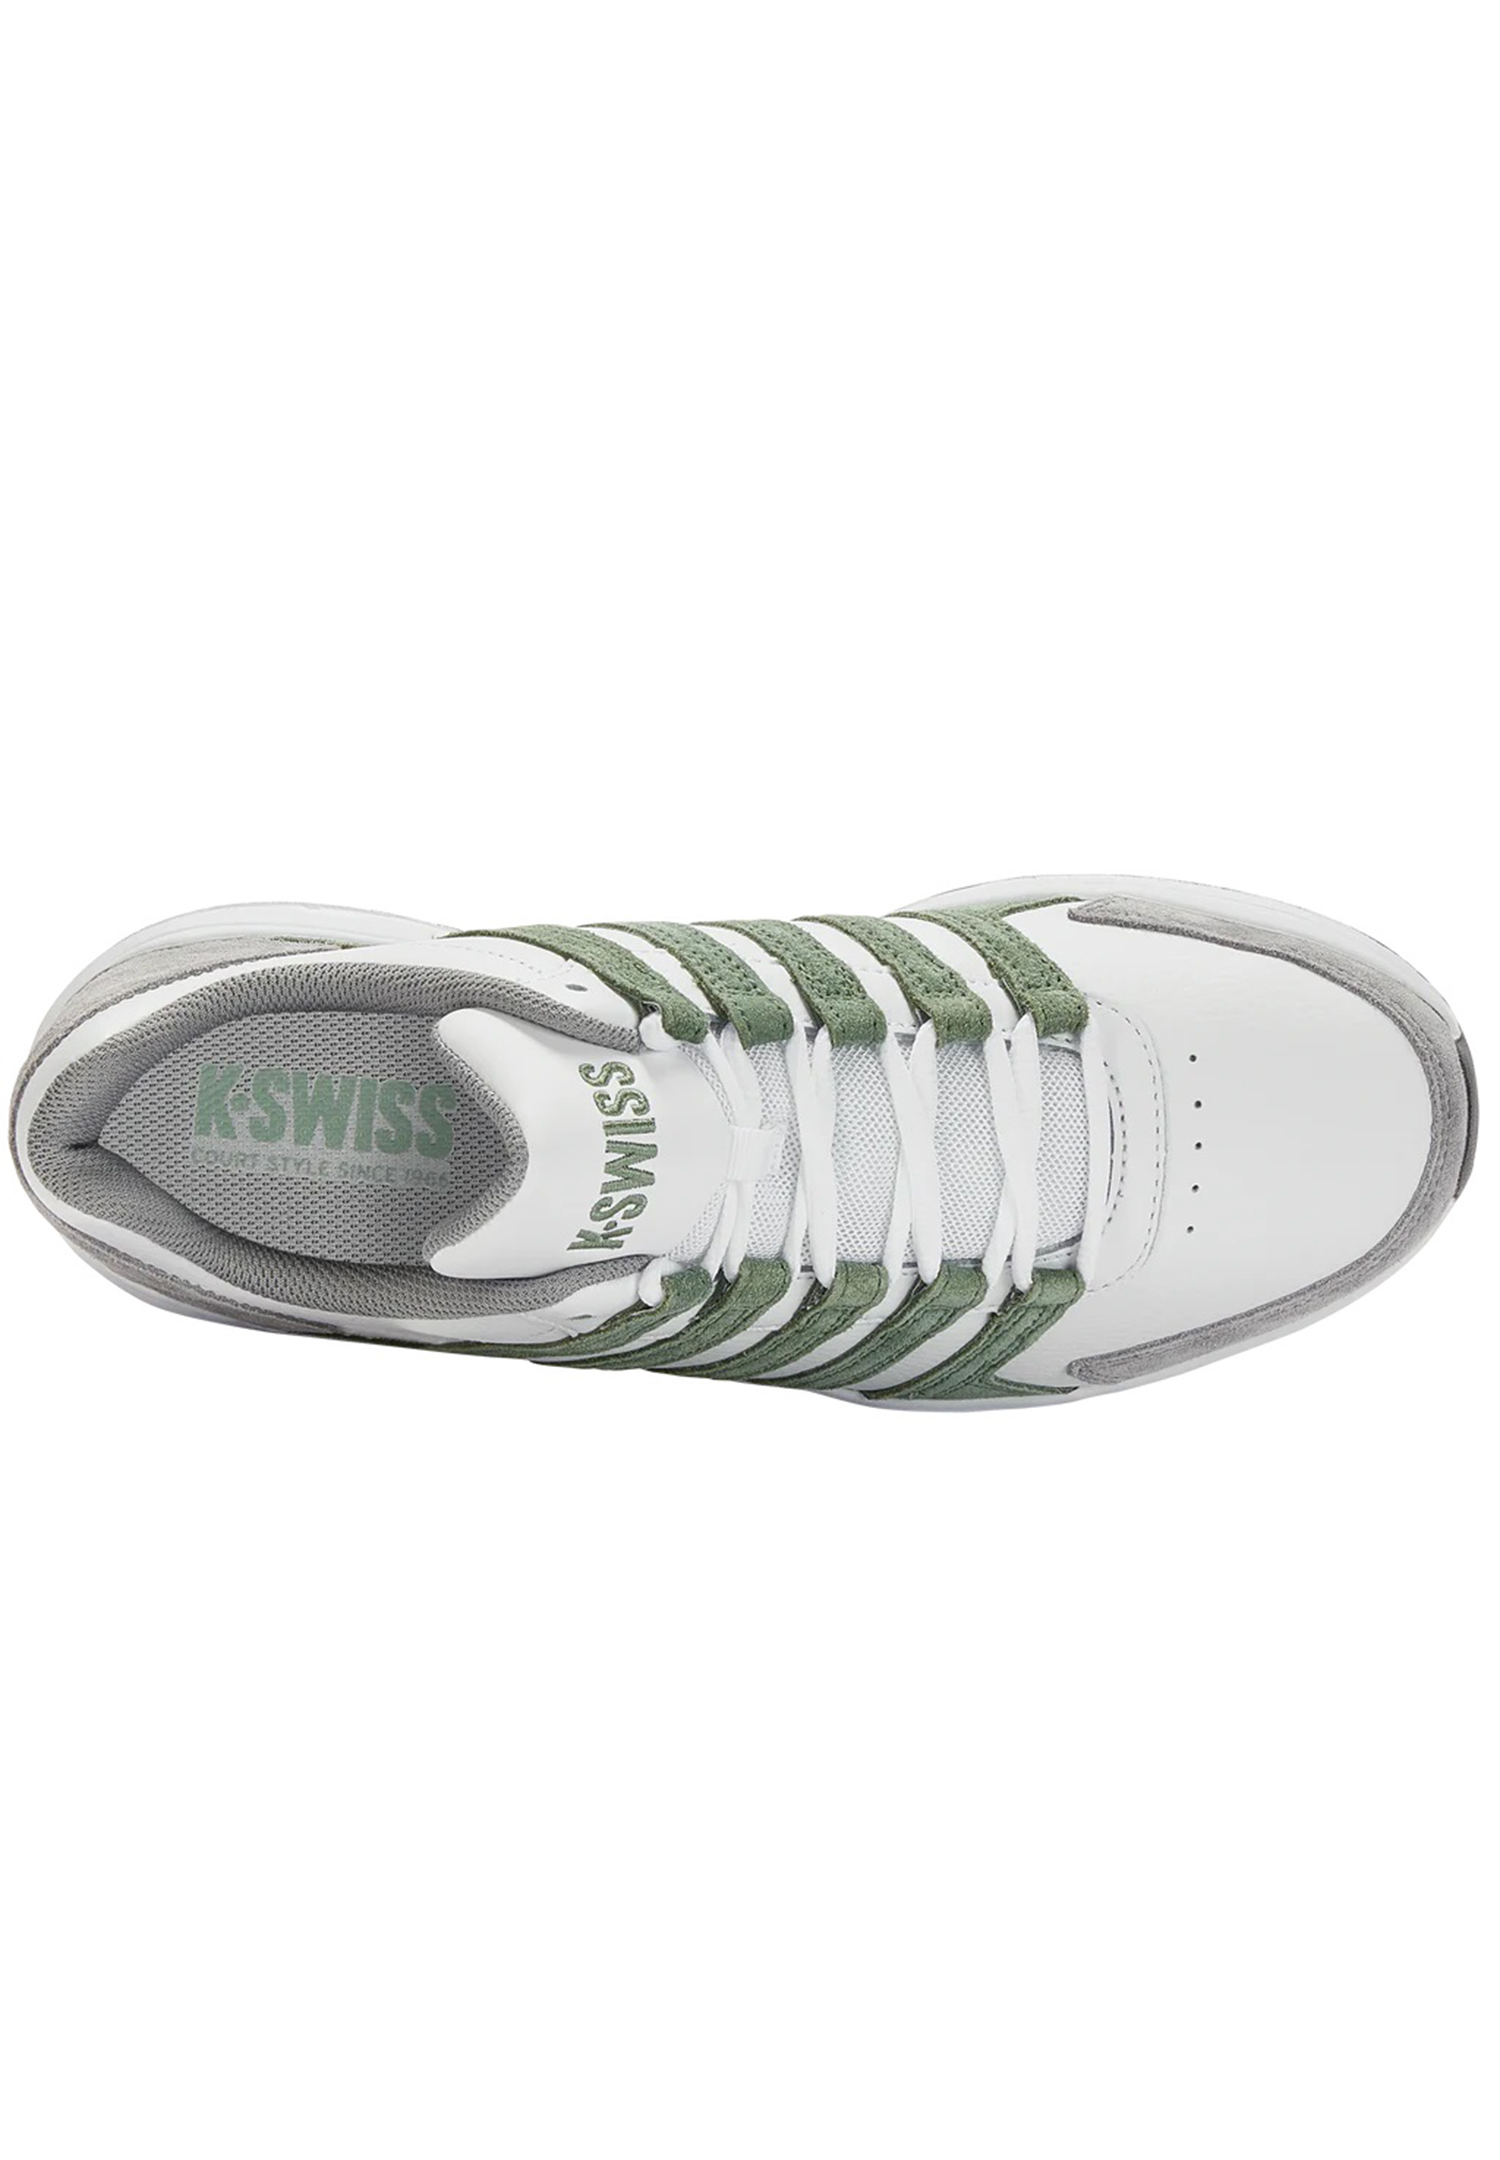 K-Swiss Vista Trainer T Herren Sneaker Sportschuh 07000-148-M grau